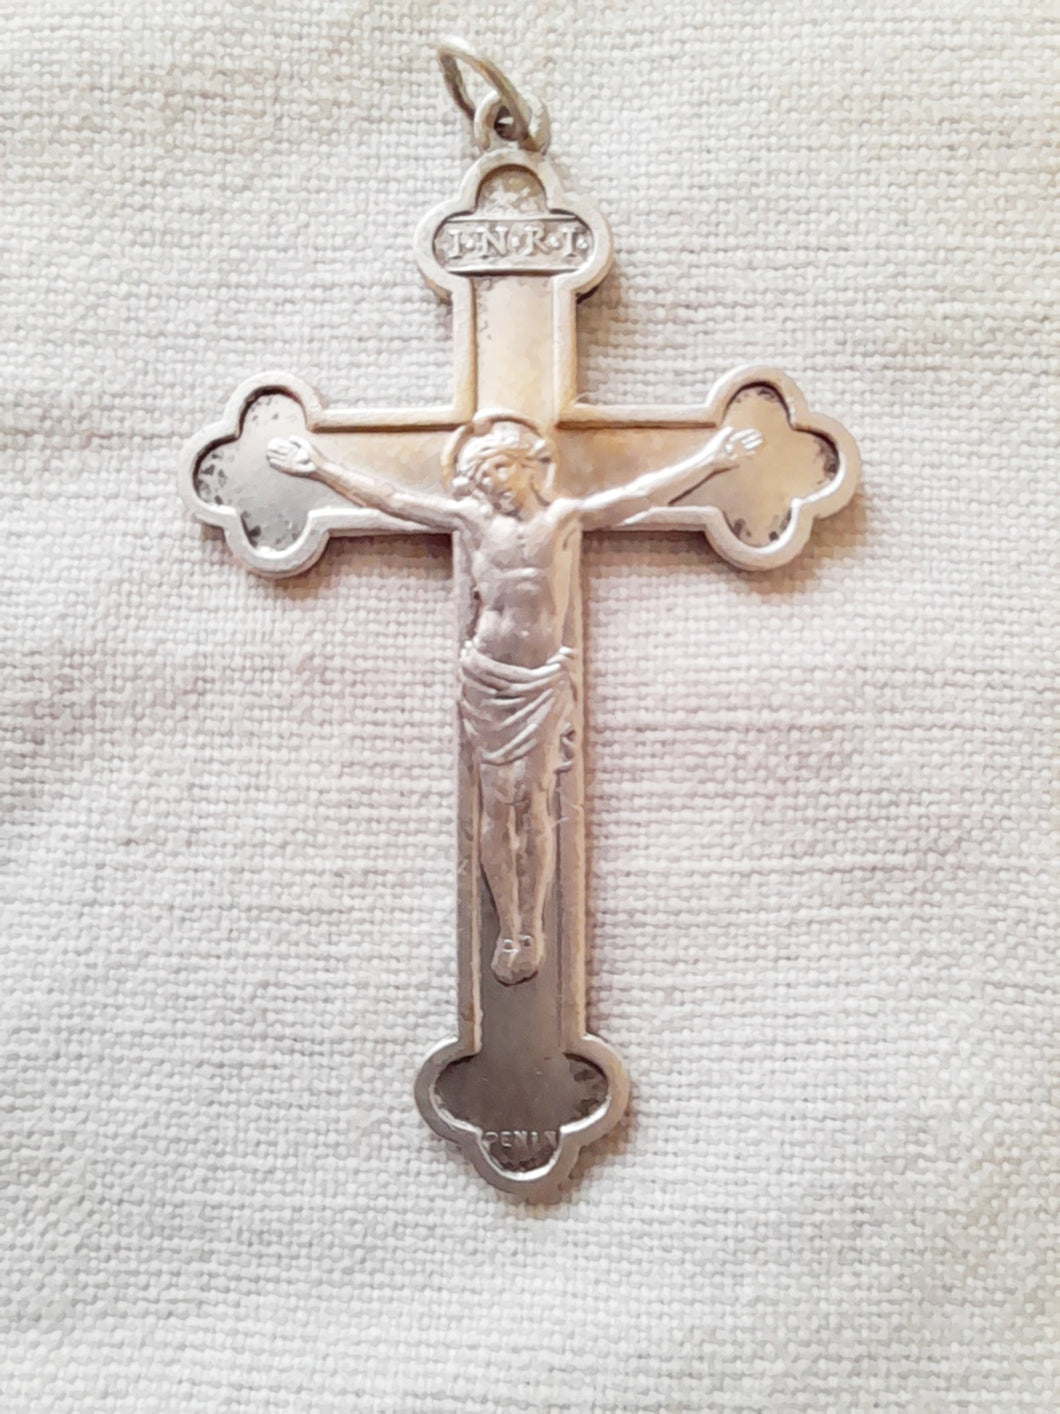 Antique Silver Cross By Penin of Lyon, Souvenir De Mission, French Silver Pendant Cross, Pilgrims Cross From 1880